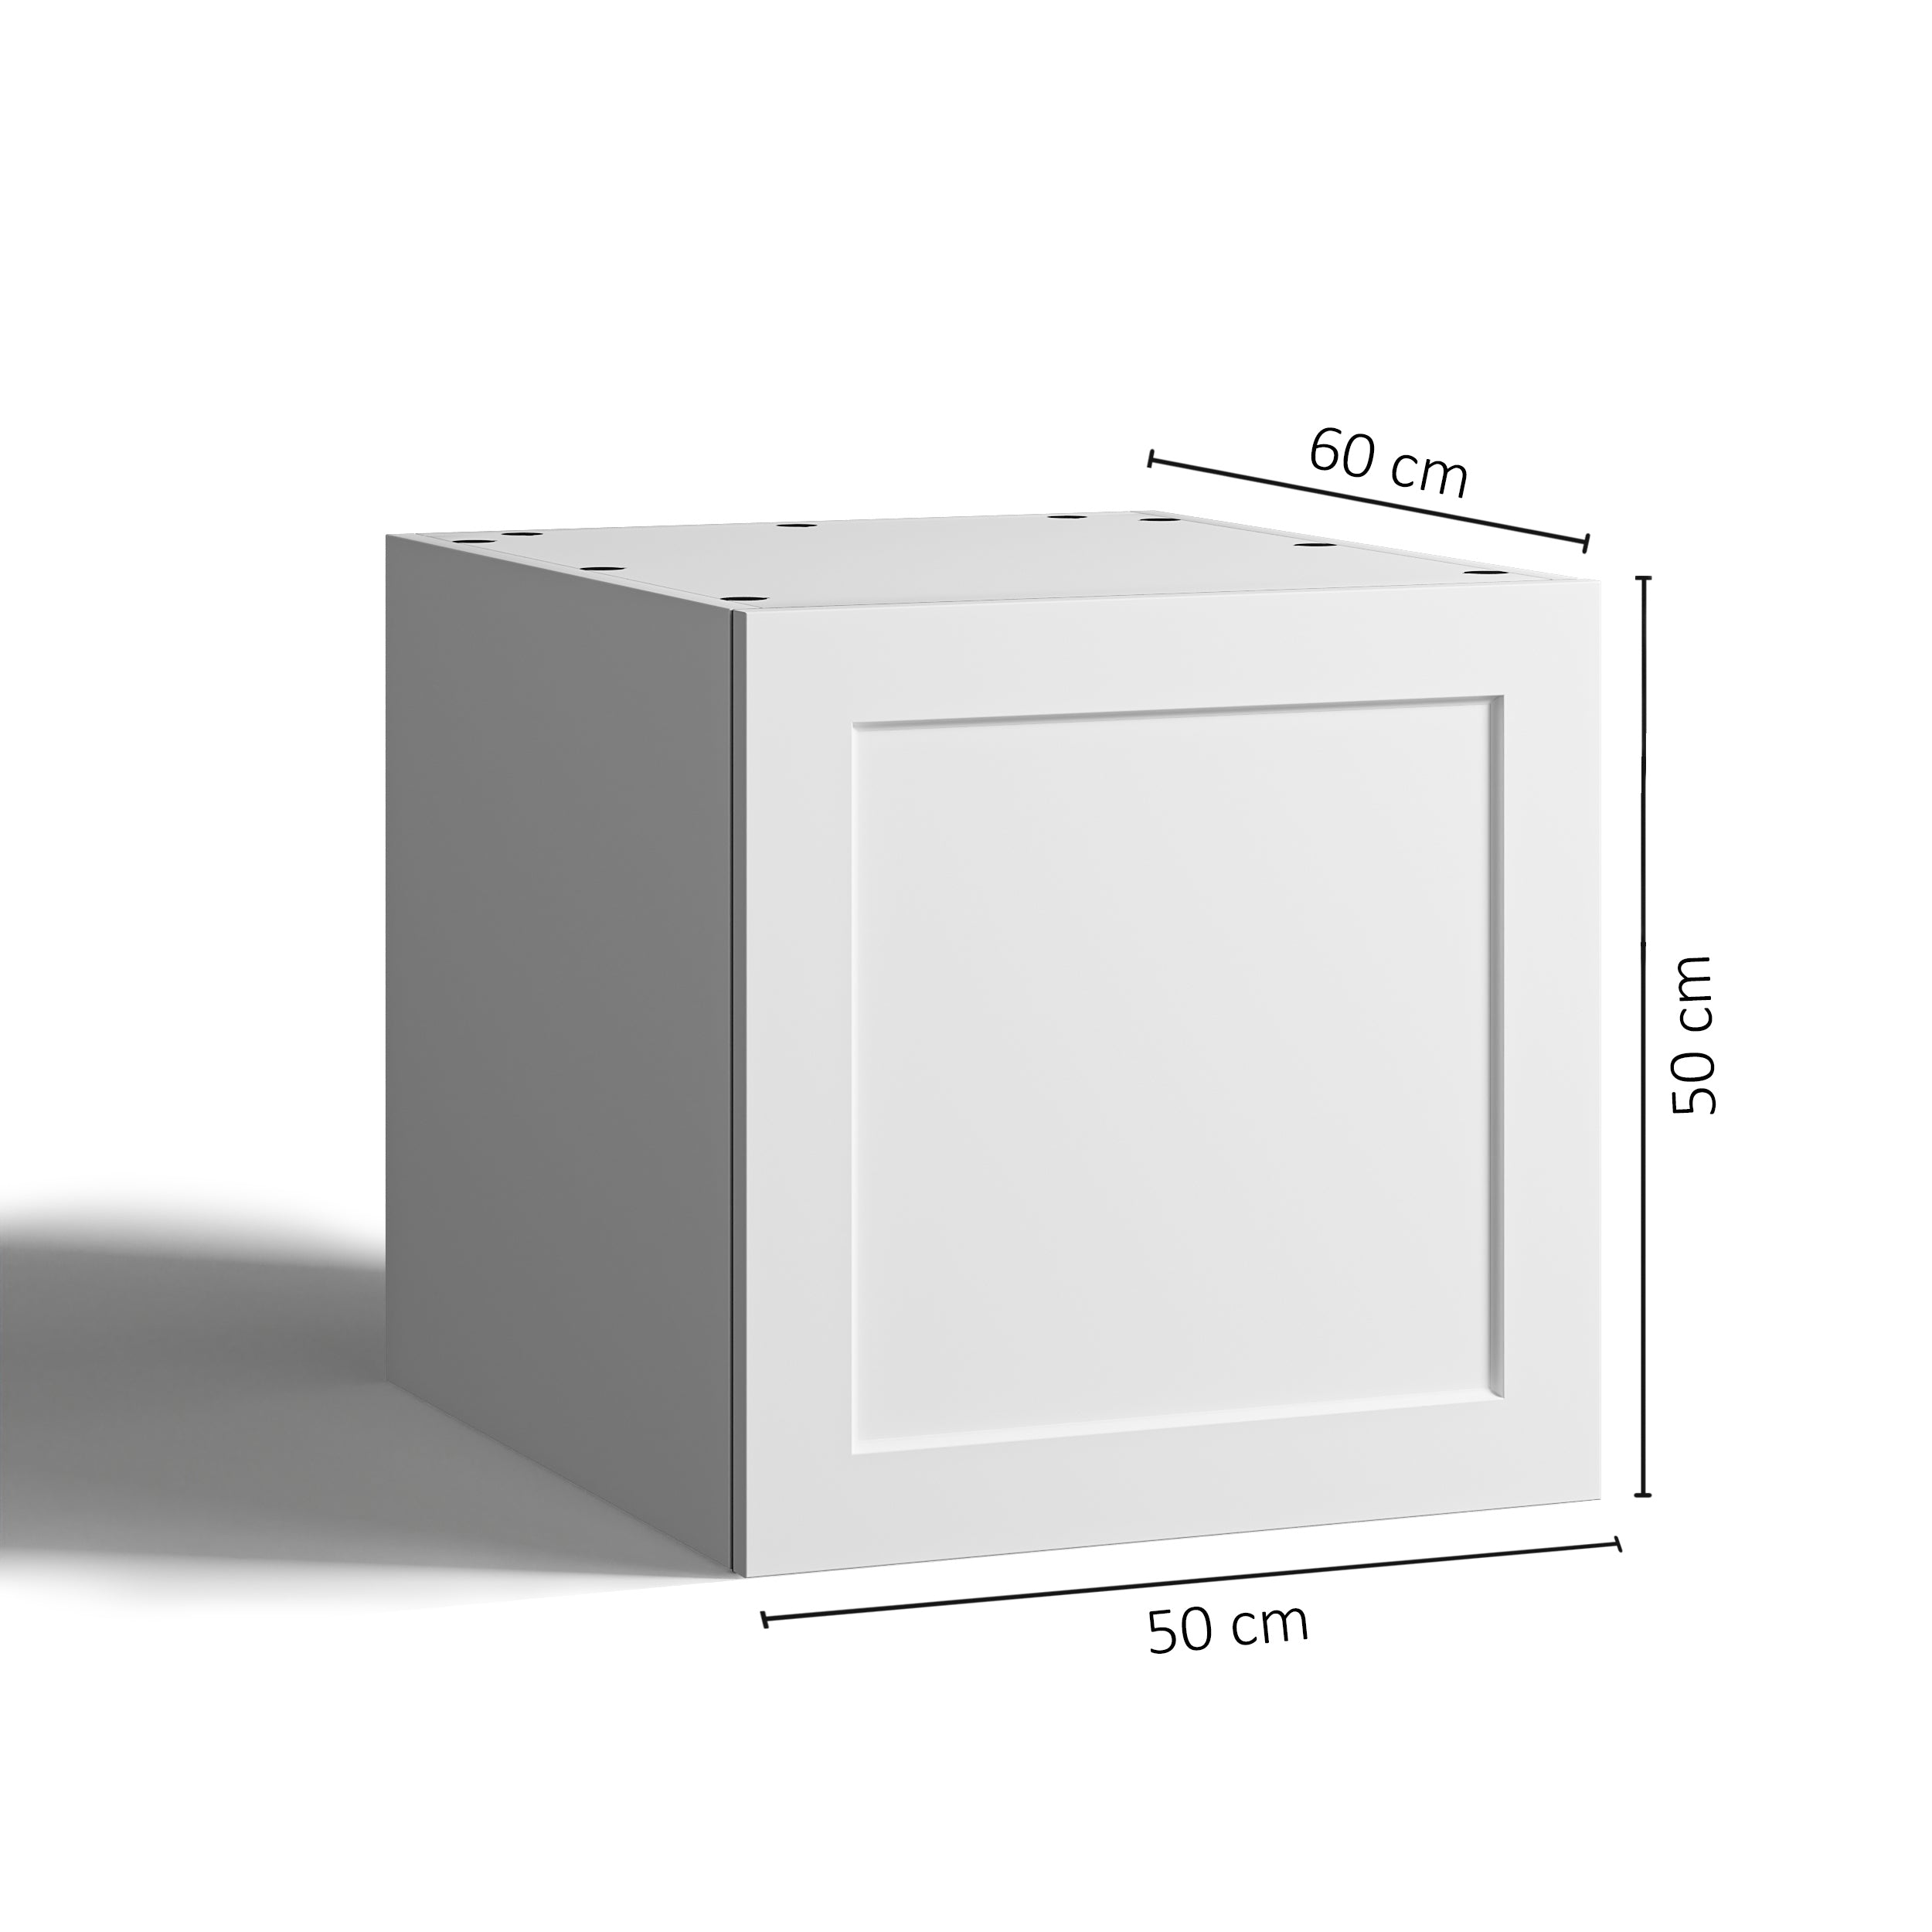 50x50 - Cabinet (58cm D) w Door - French Shaker - RAW - PAX